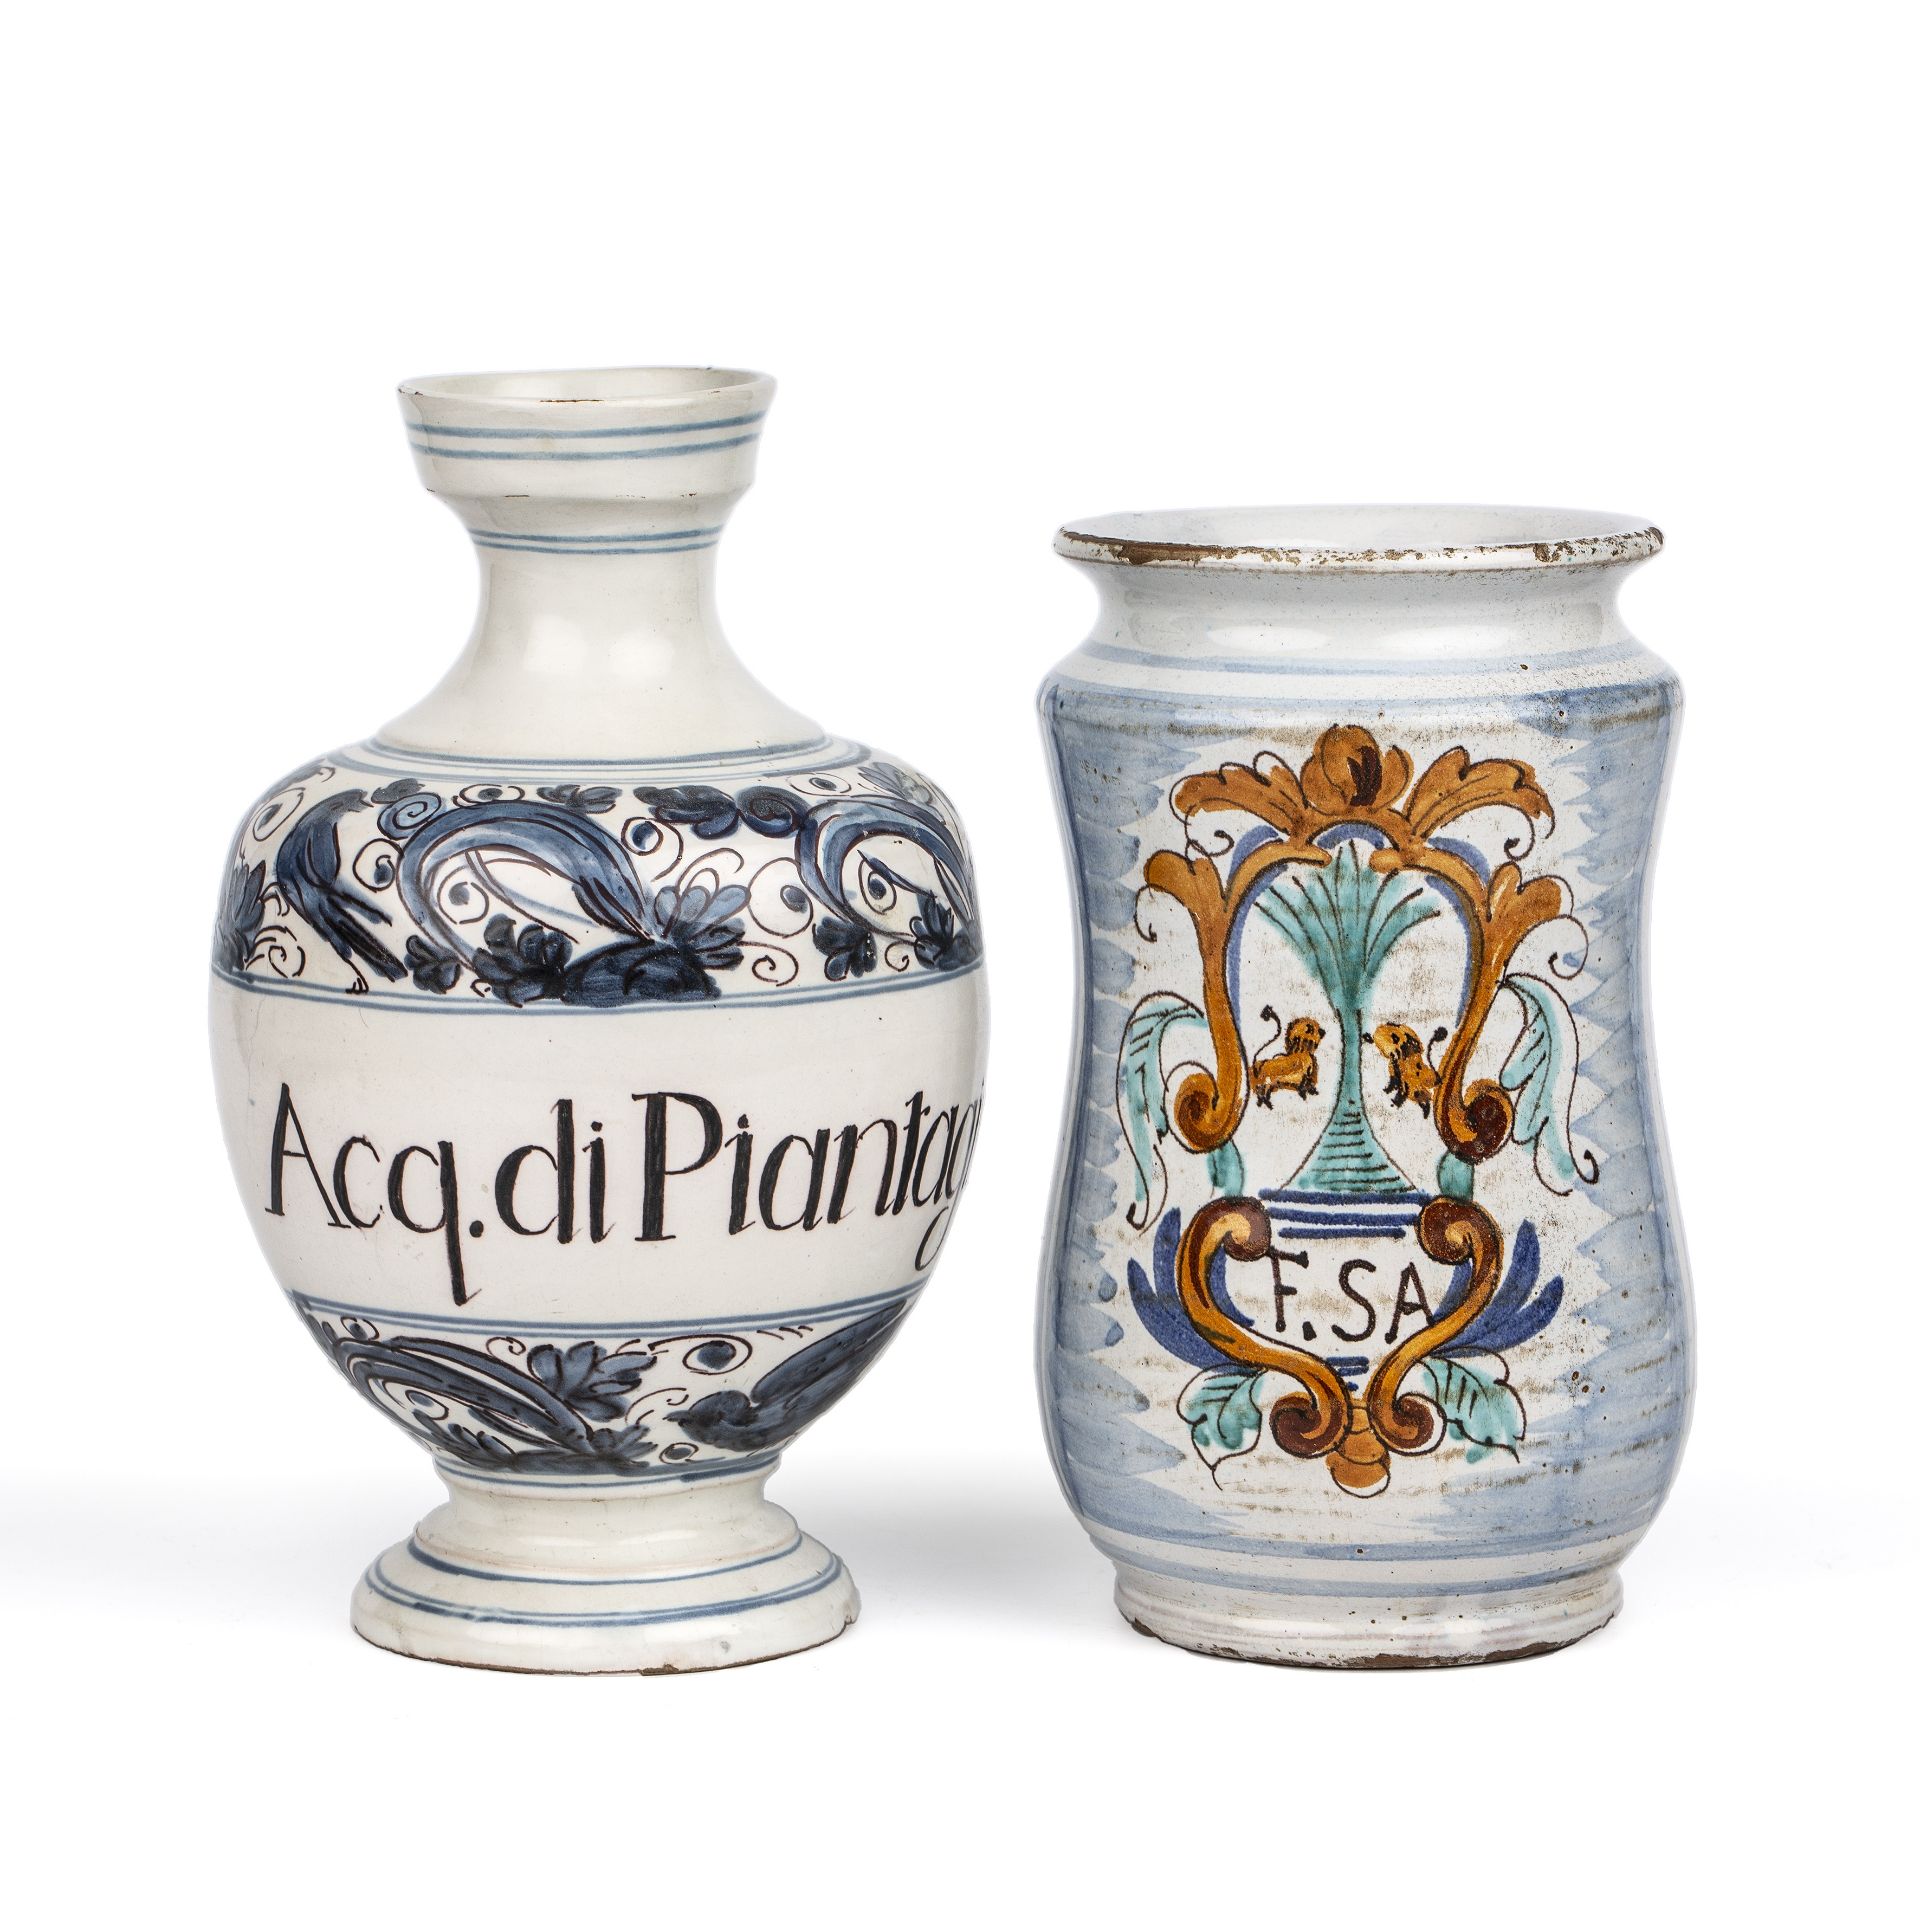 A Savona wet syrup jar circa 1700, 23cm high; together with a Cerreto Sannita drug jar circa 1780,